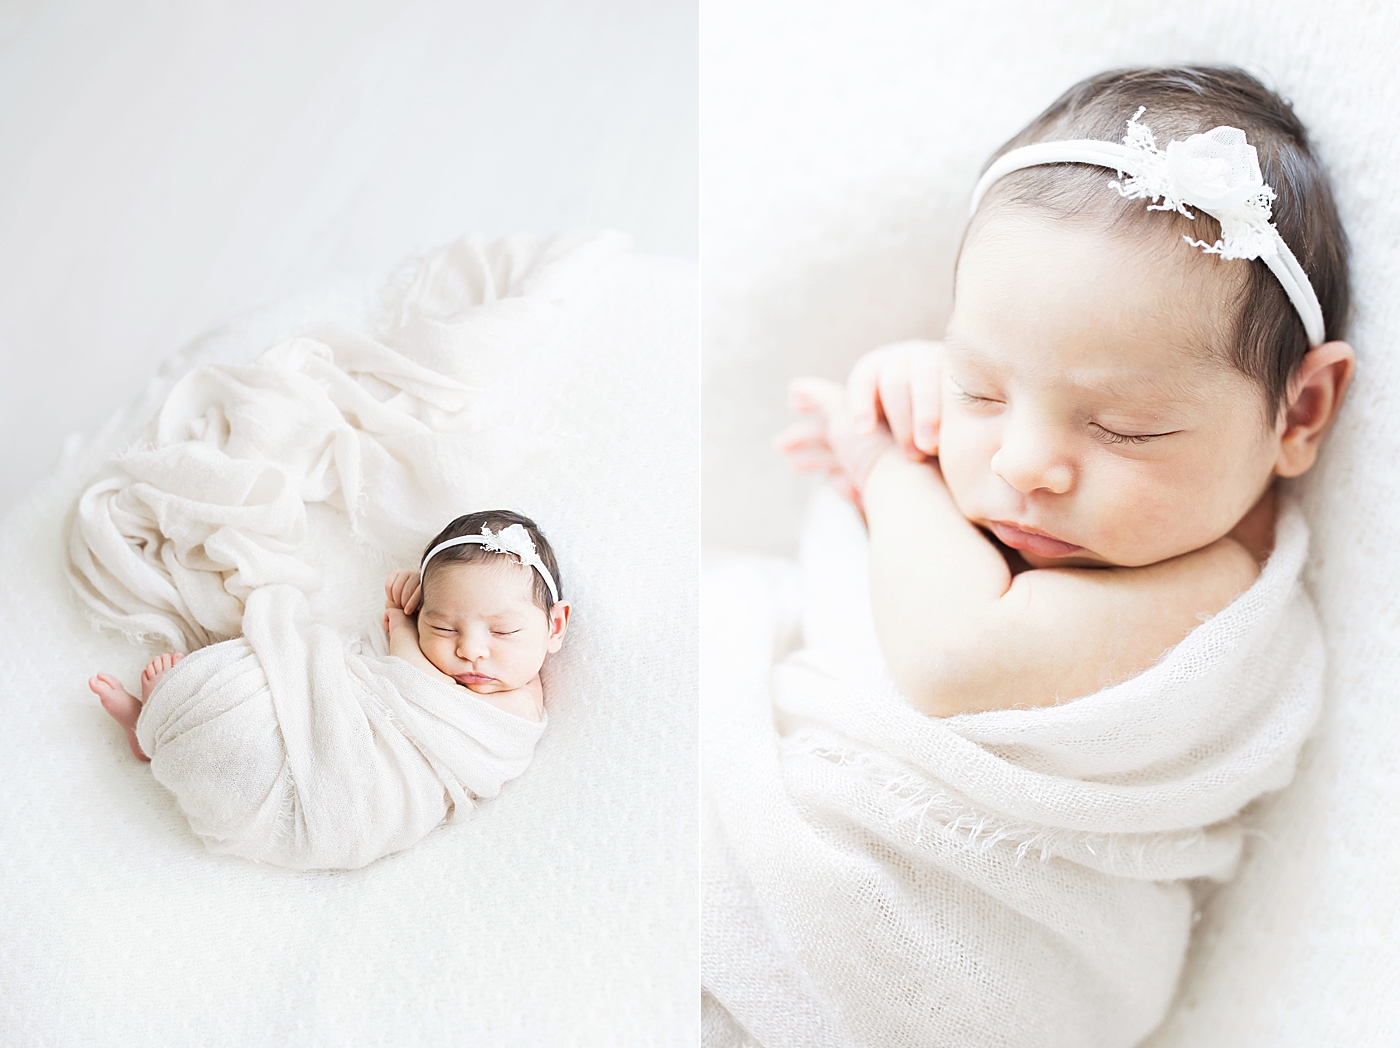 Baby girl sleeping during newborn photoshoot. Photo by Fresh Light Photography.